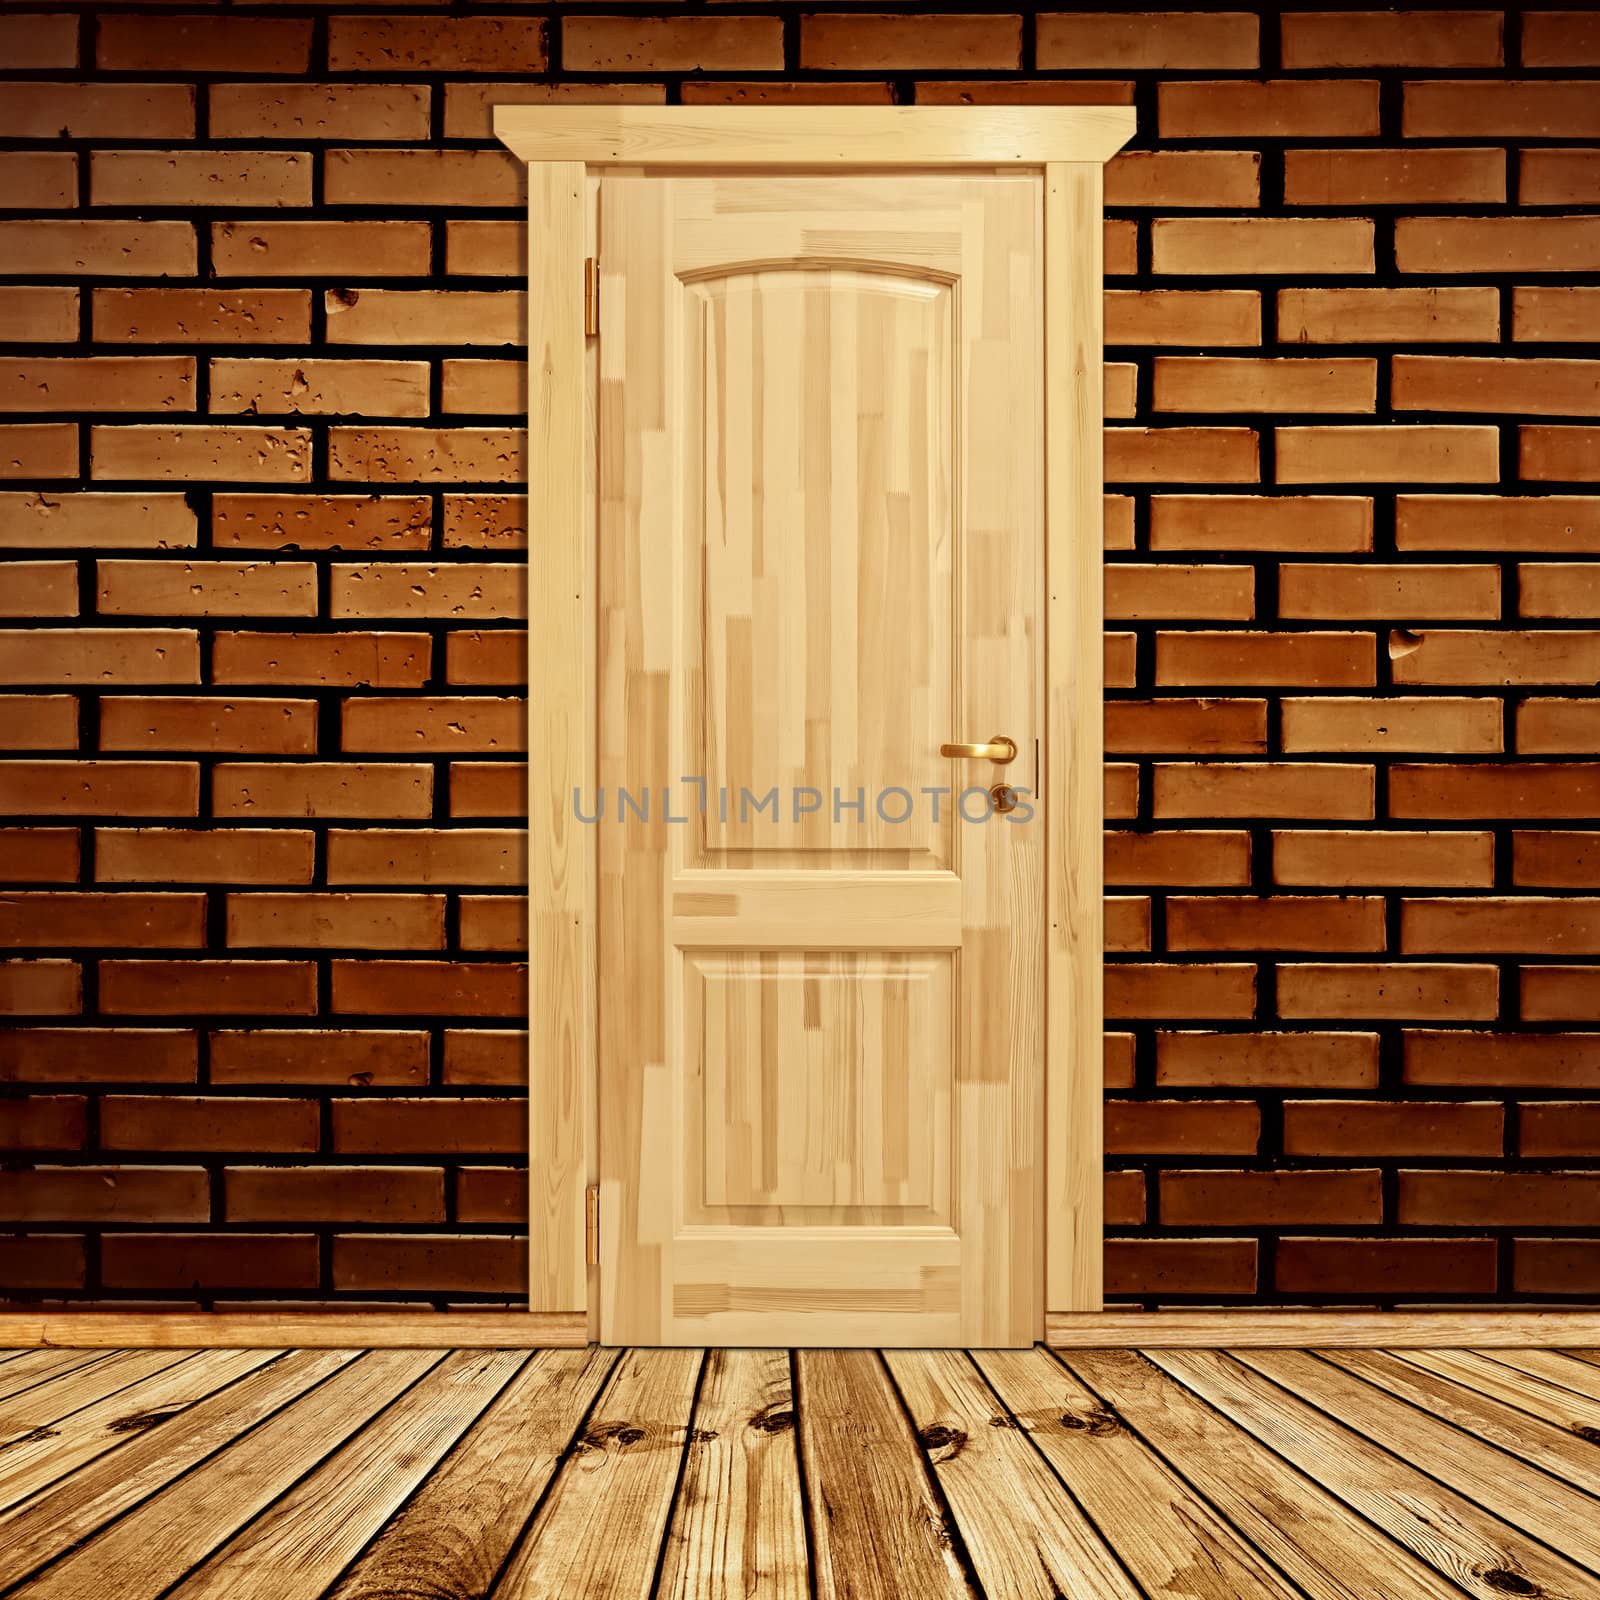 Closed wooden door in the btick wall